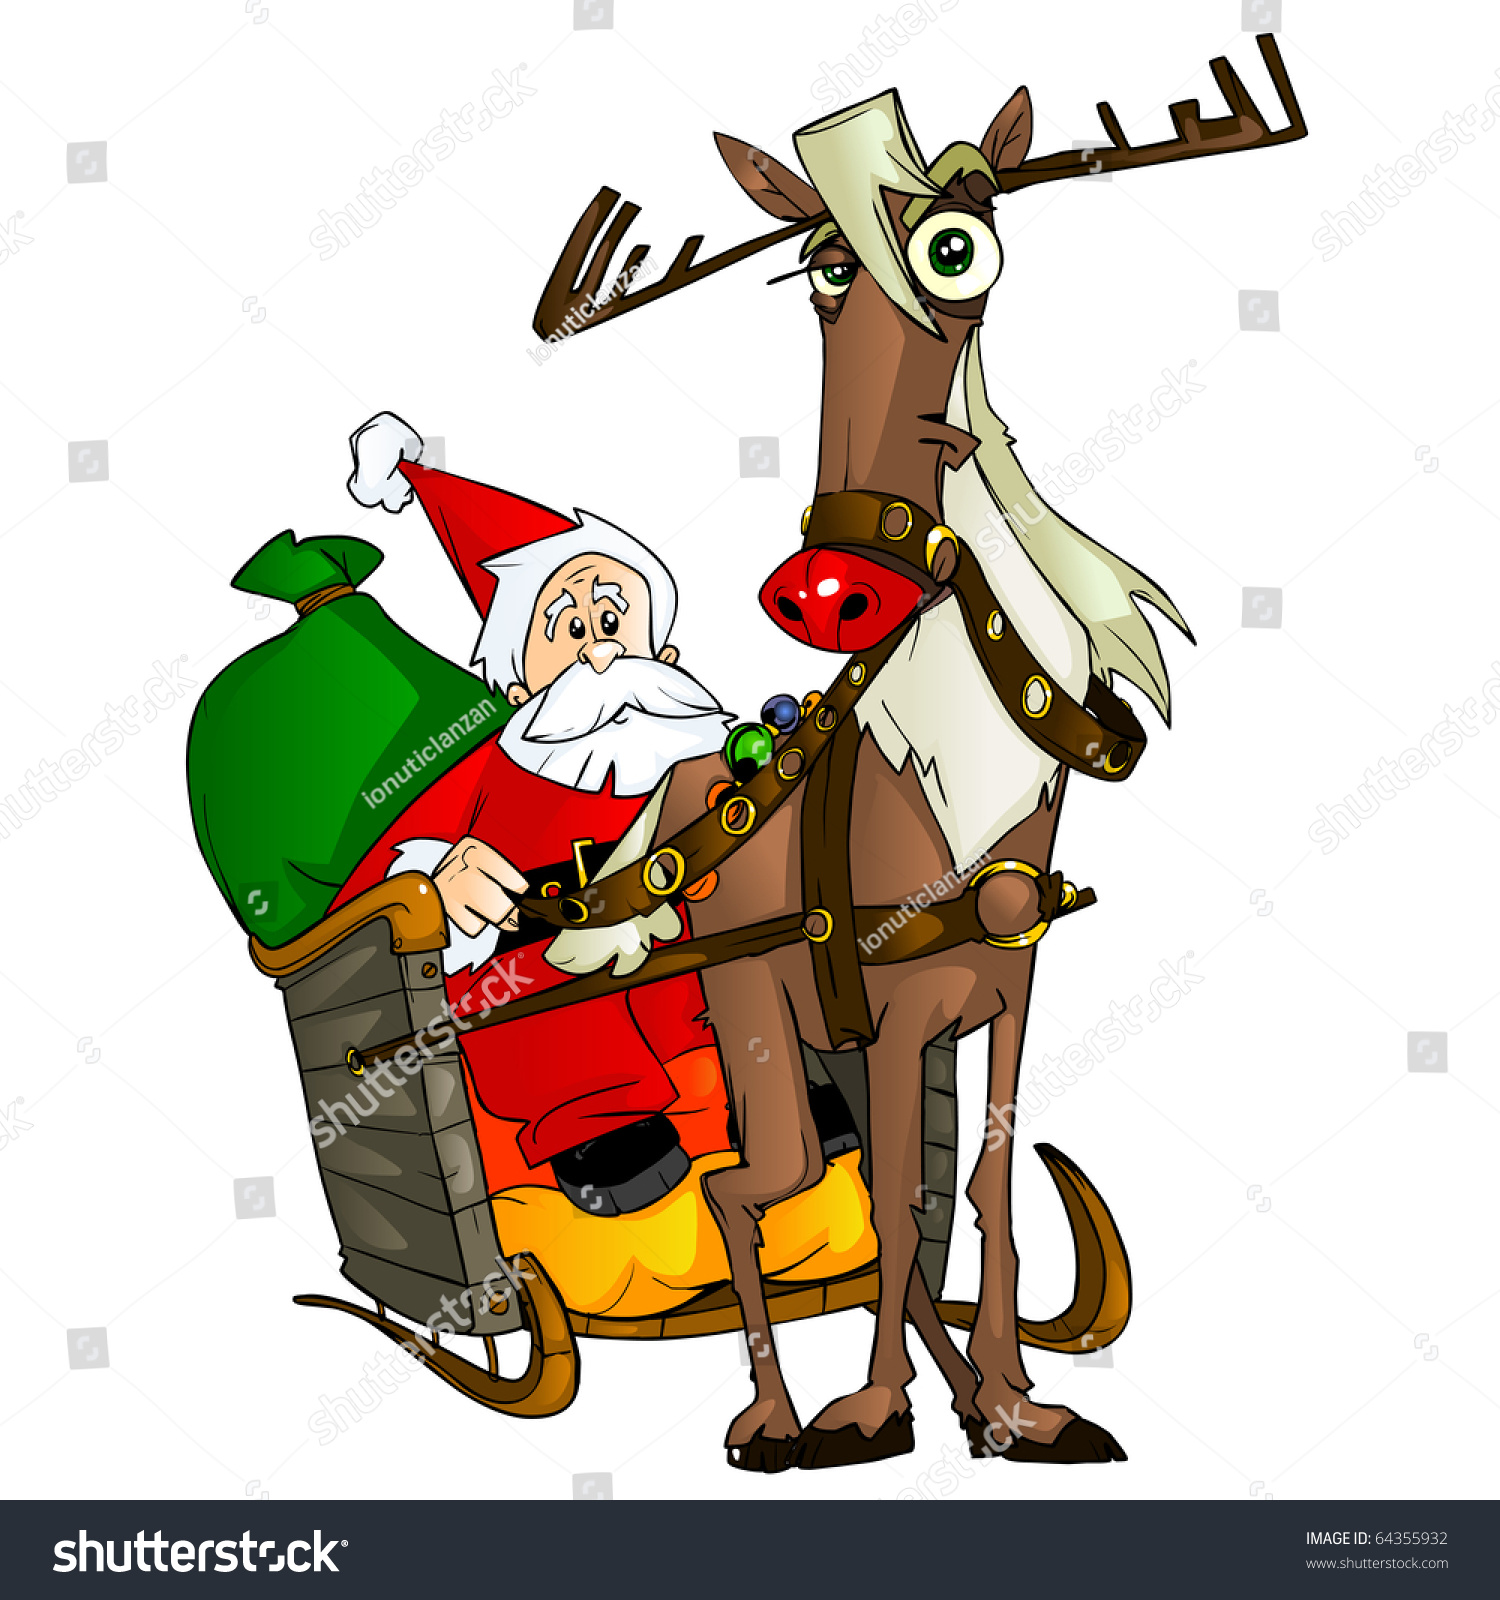 Reindeer And Santa Claus Illustration - 64355932 : Shutterstock